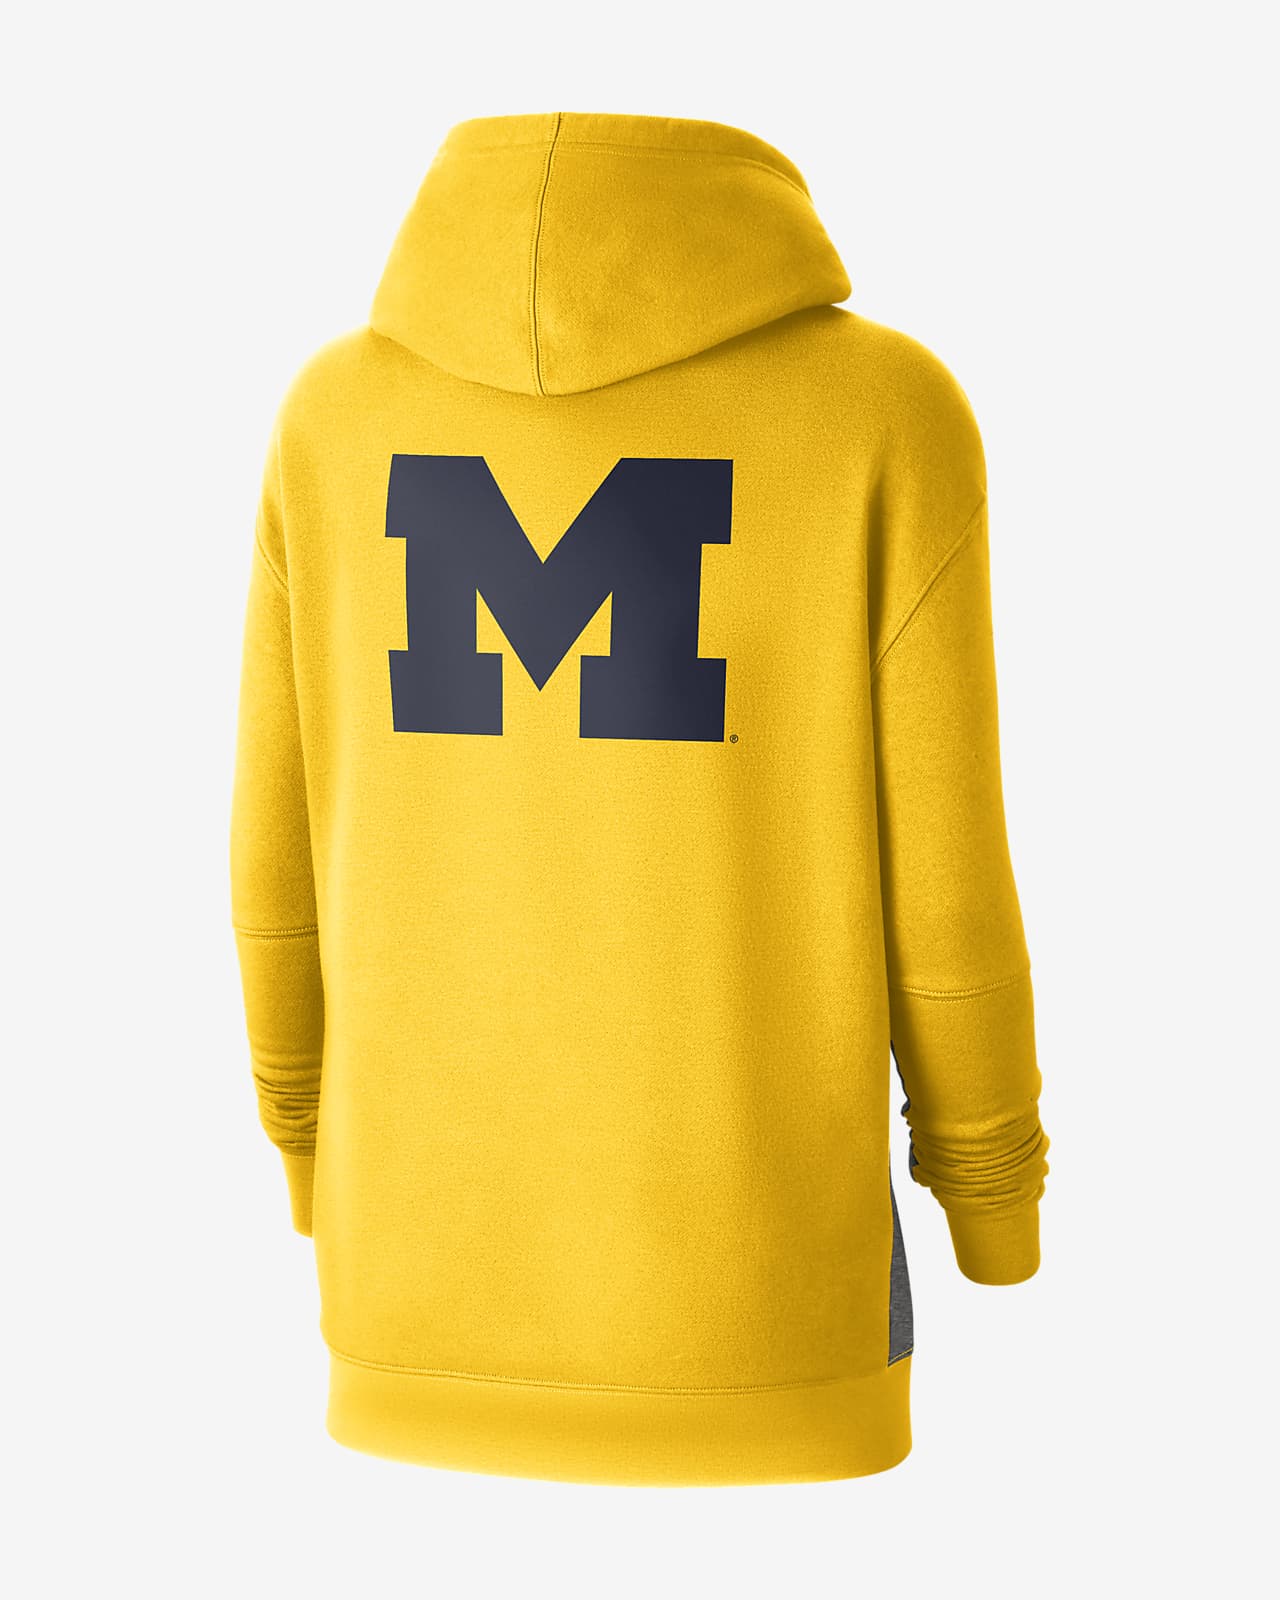 NCAA Central Michigan University Hoodie Sweatshirt Game Day Fleece